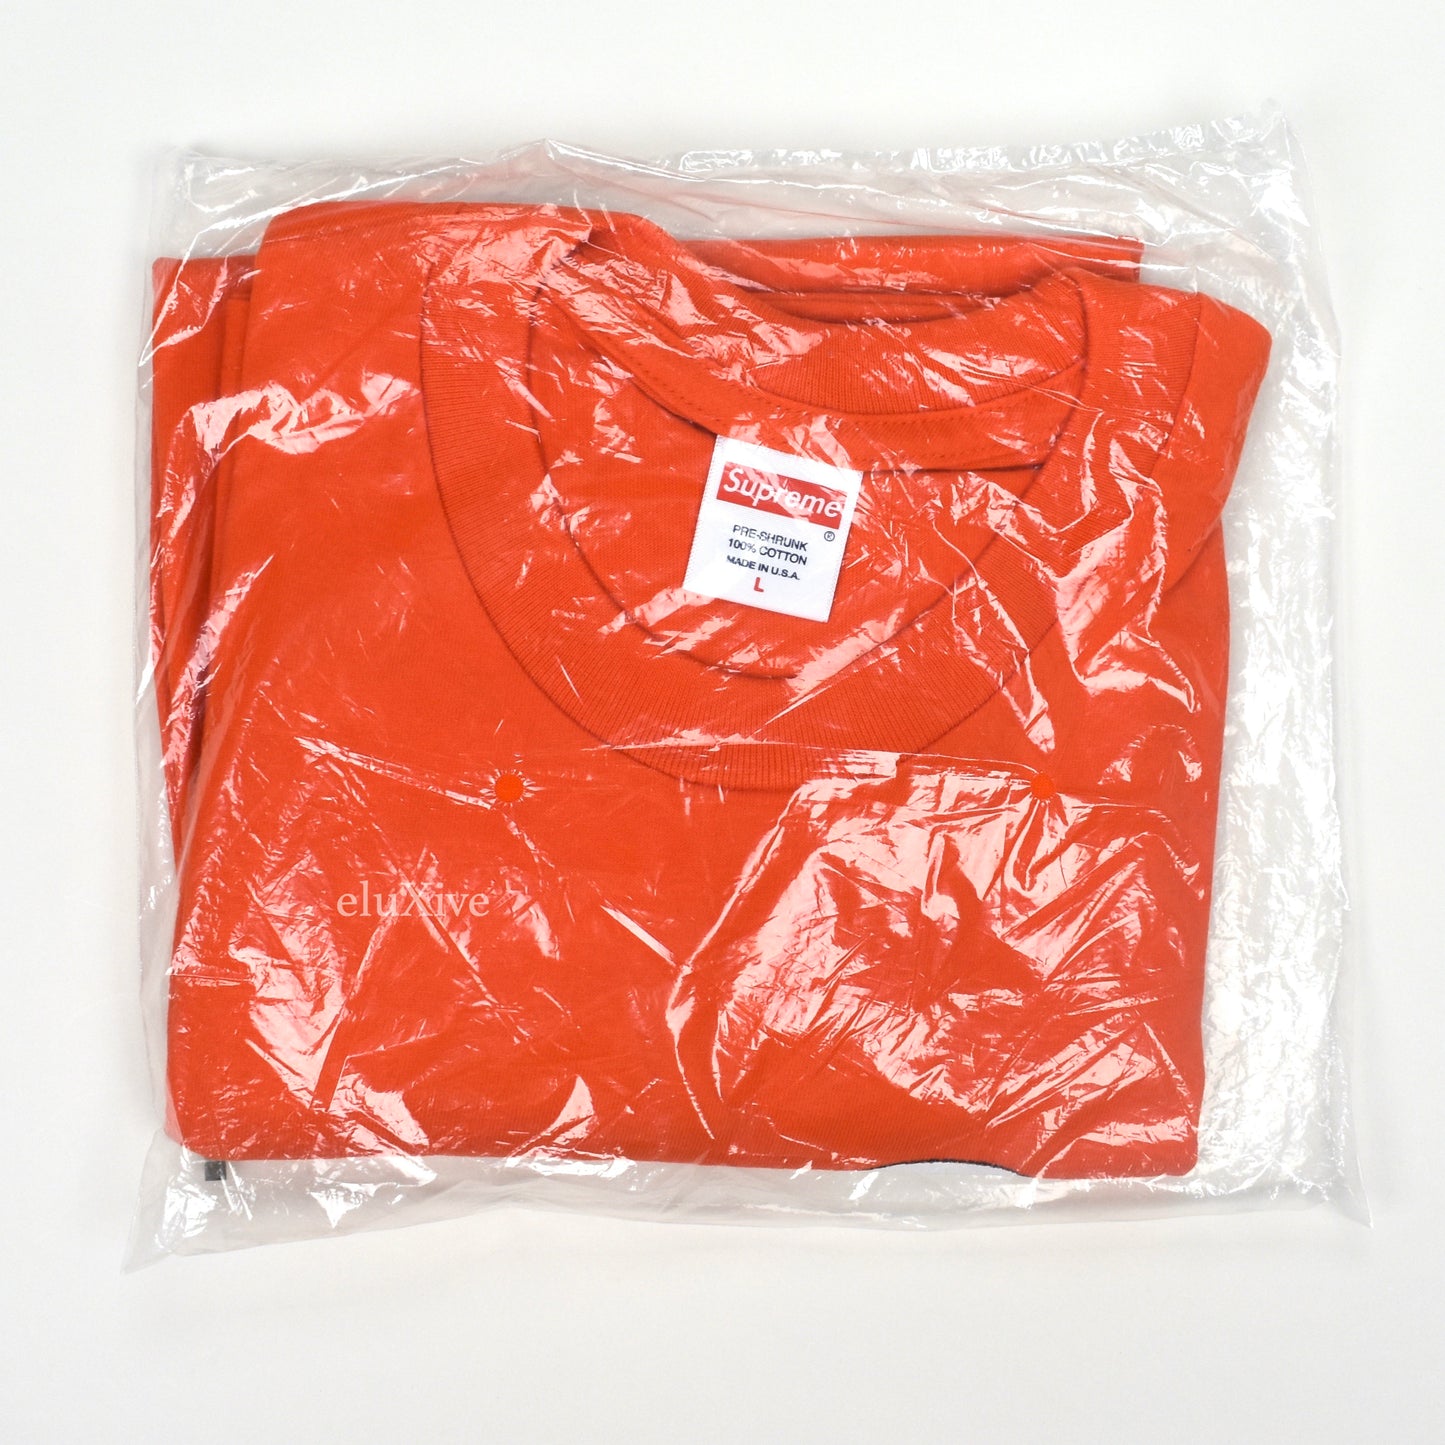 Supreme x Daniel Johnston - Orange Frog Logo T-Shirt